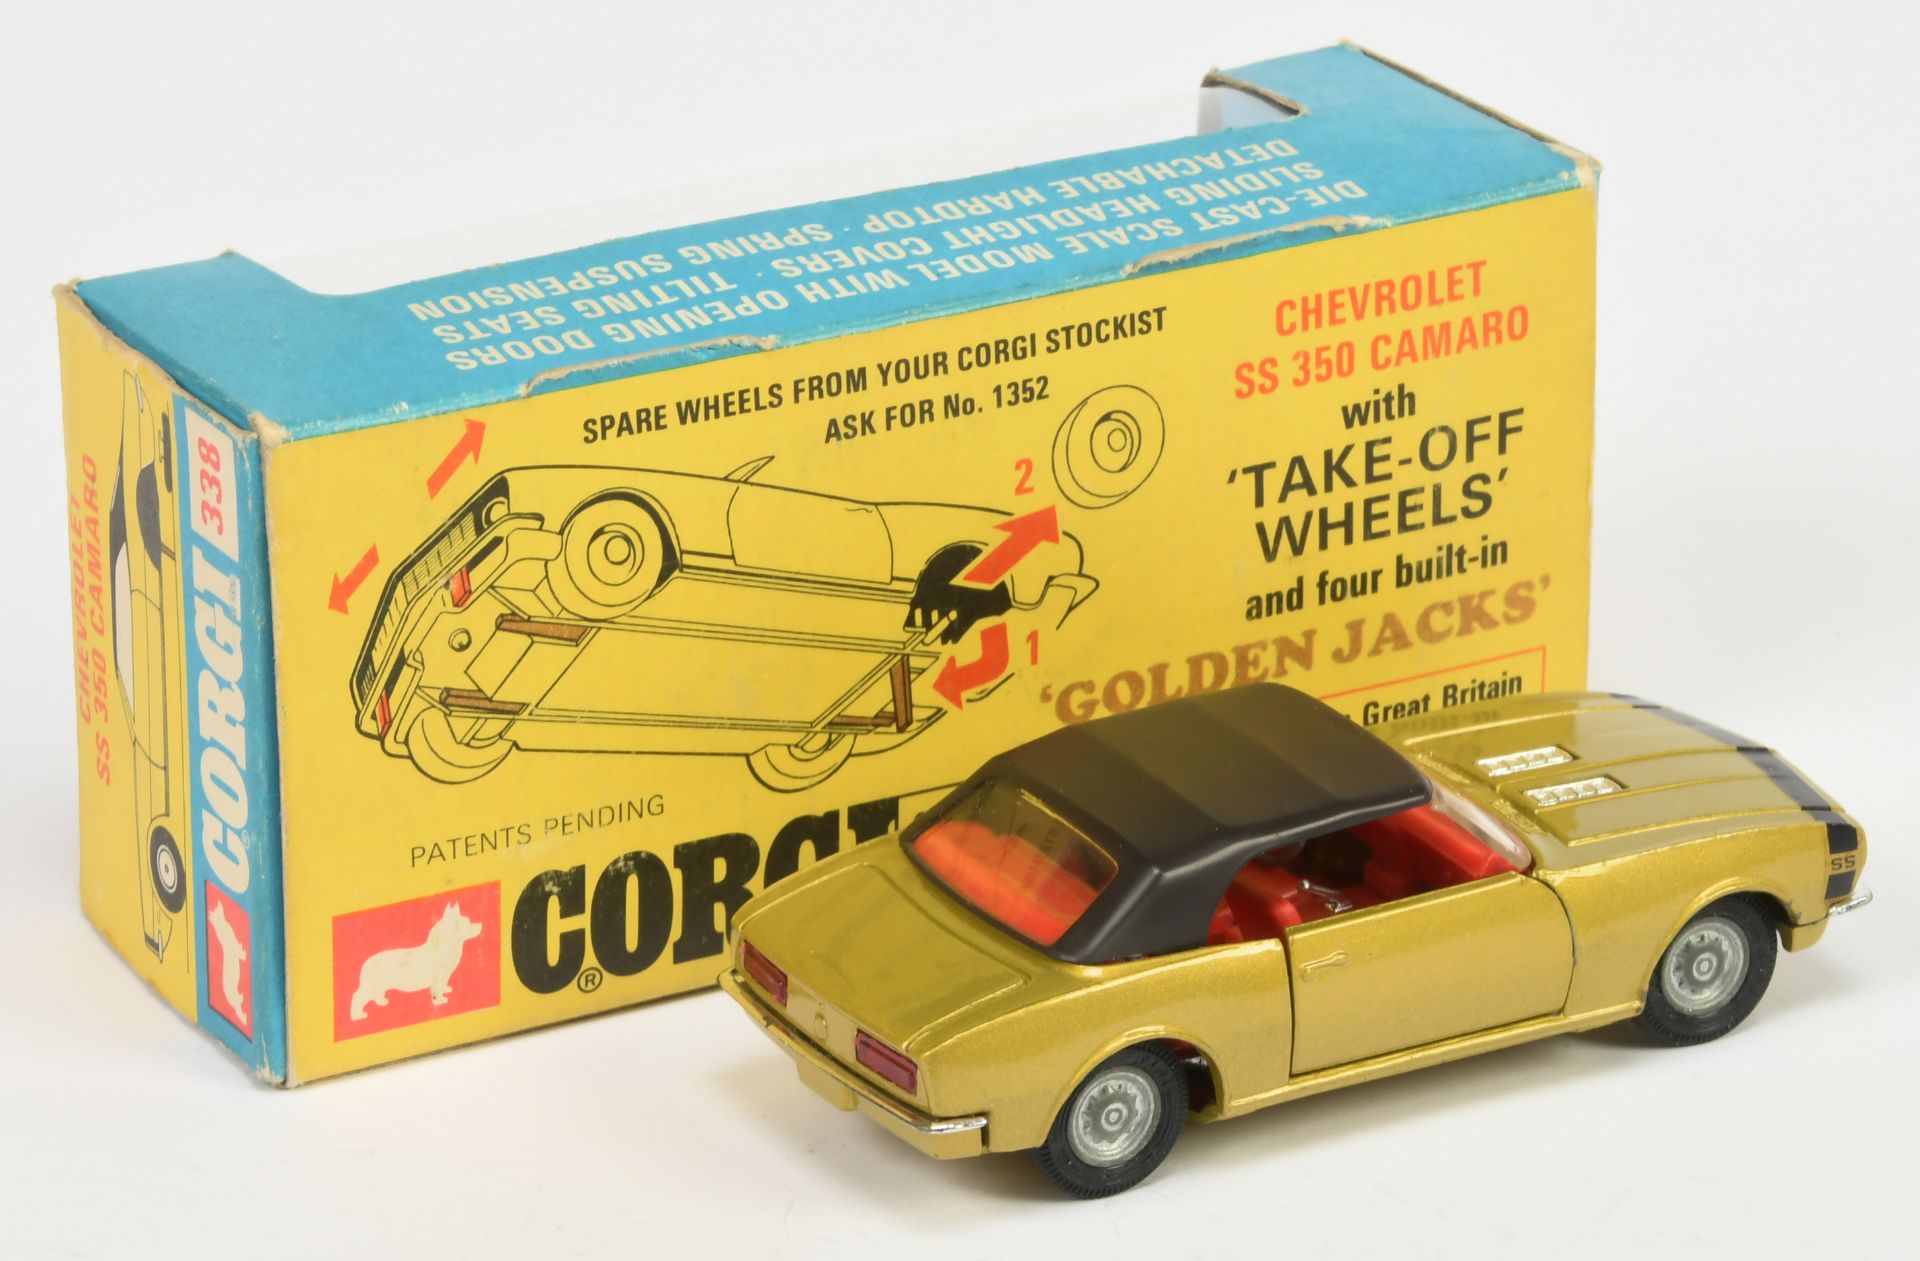 Corgi Toys 338 Chevrolet SS350 Camaro - Lime body, red interior, chrome trim and "Golden Jacks" T... - Image 2 of 2